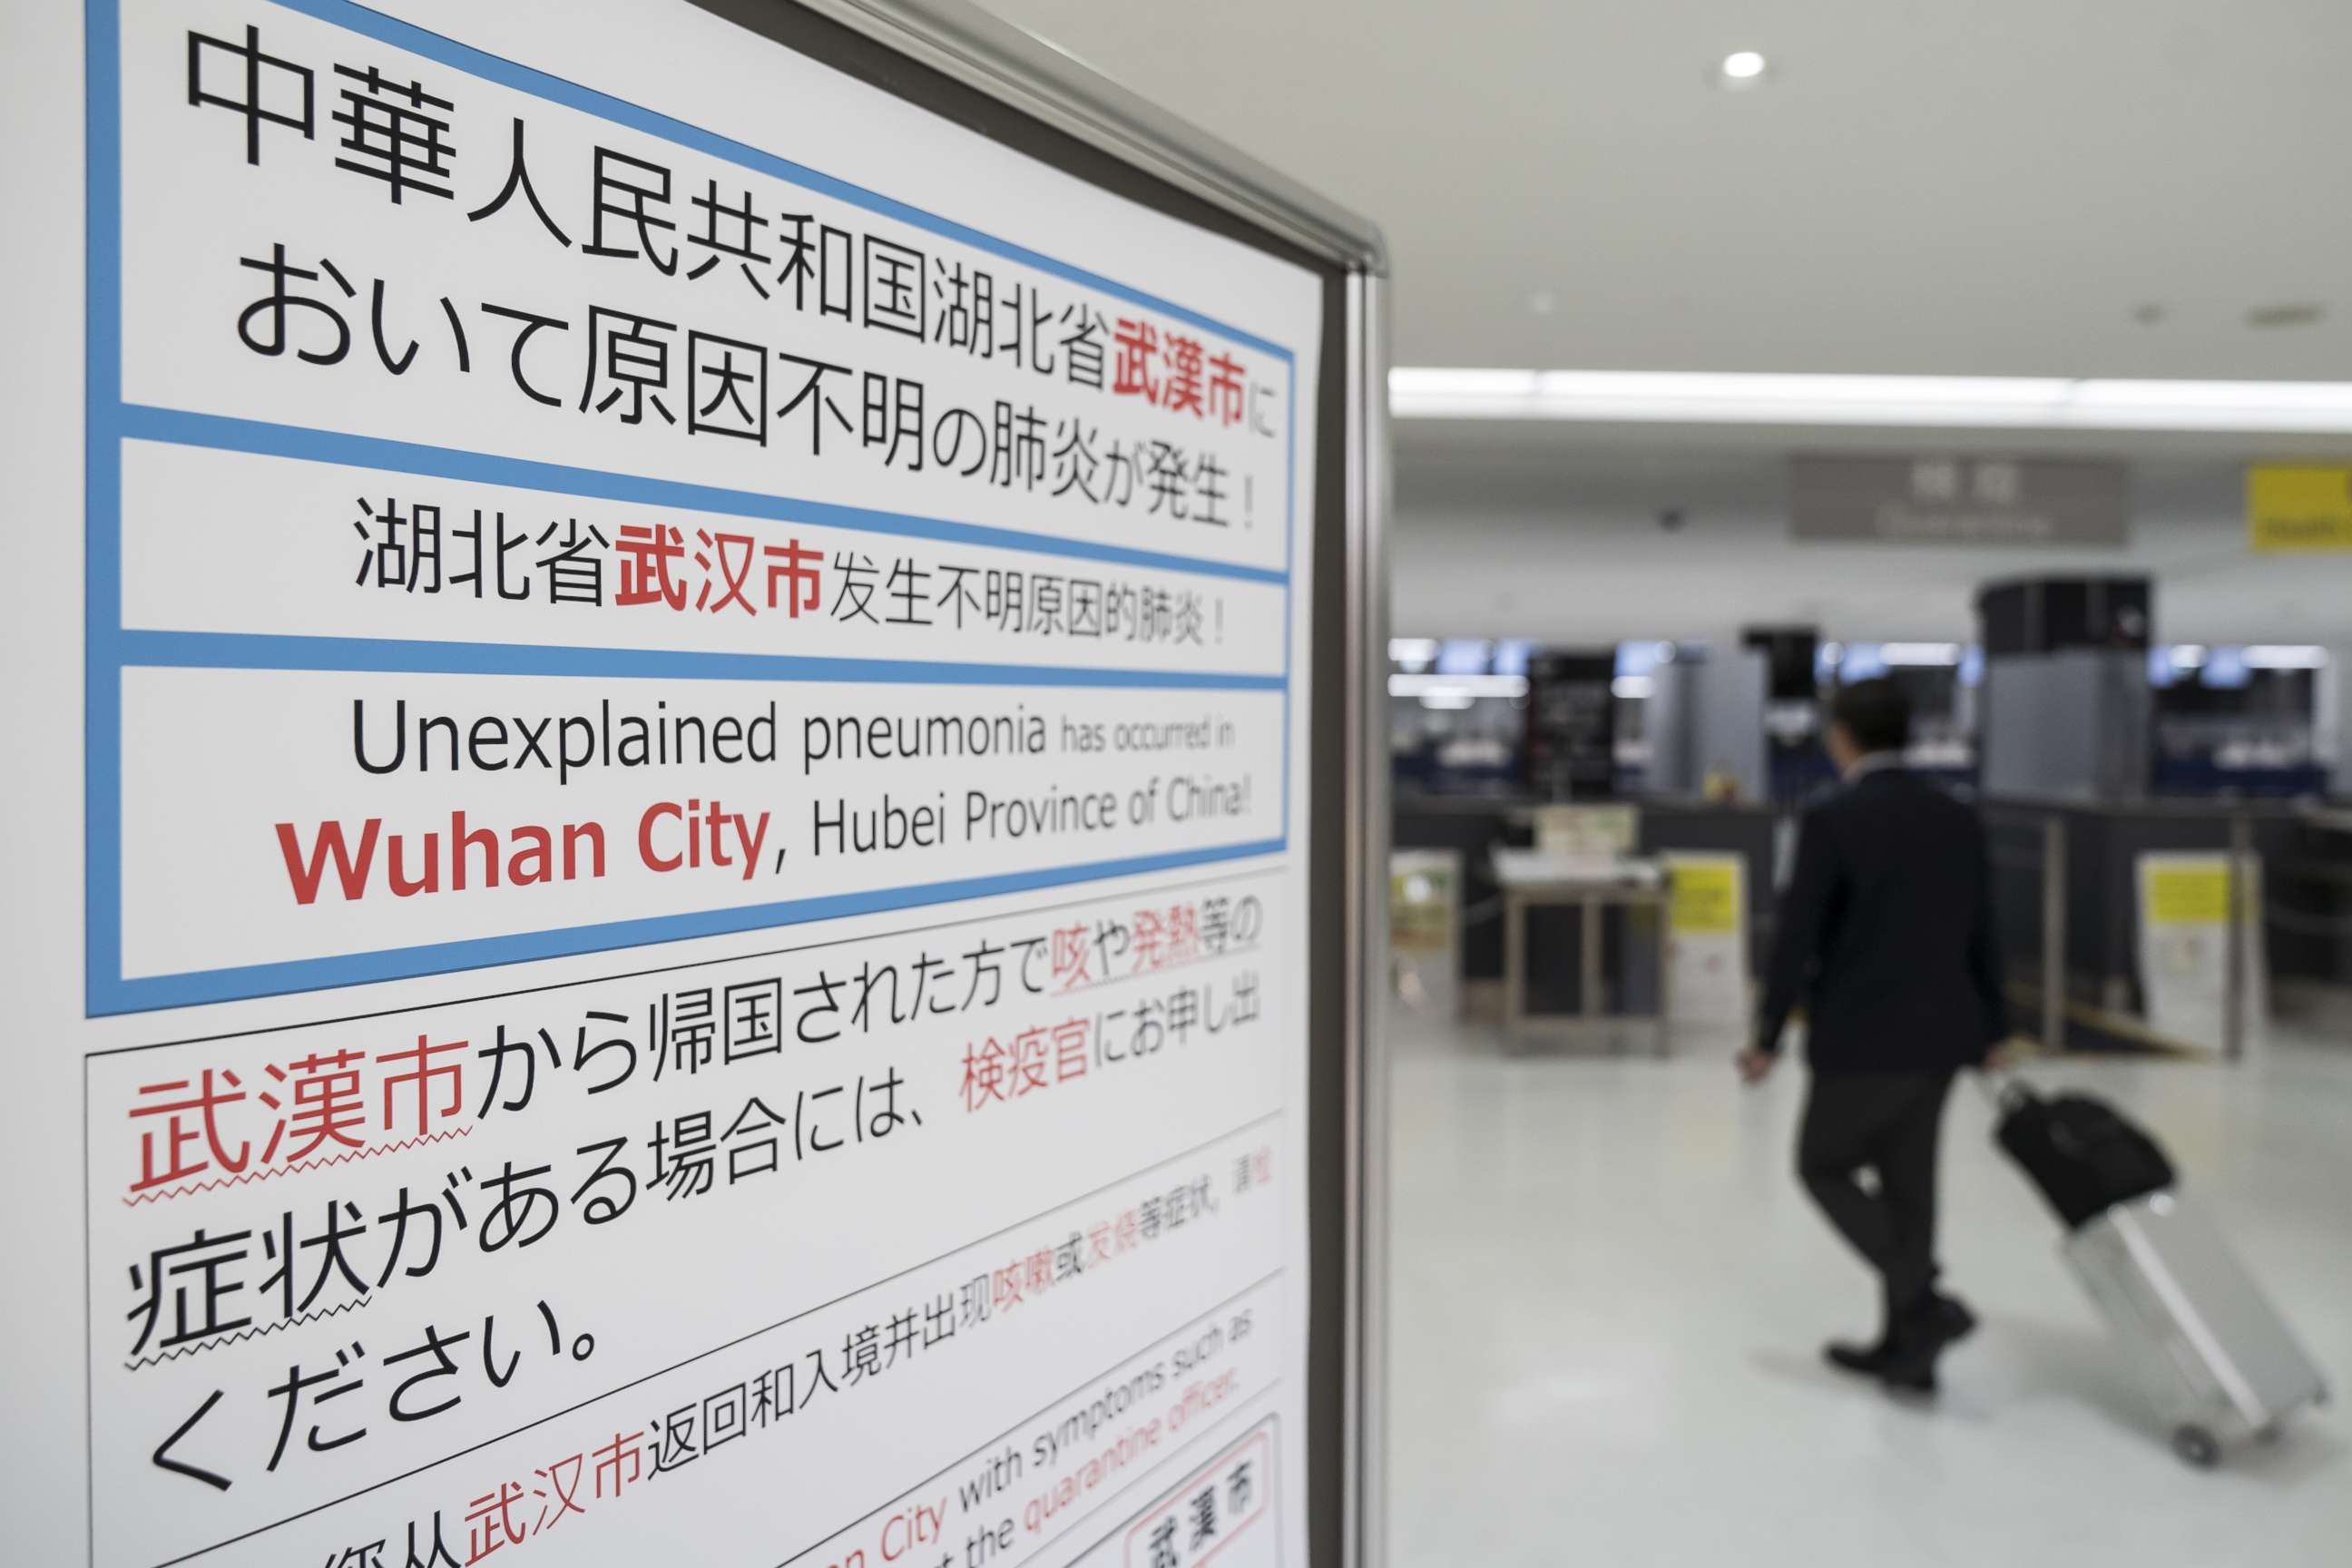 PHOTO: A passenger walks past a notice for  passengers from Wuhan, China displayed near a quarantine station at Narita airport on Jan. 17, 2020, in Narita, Japan.